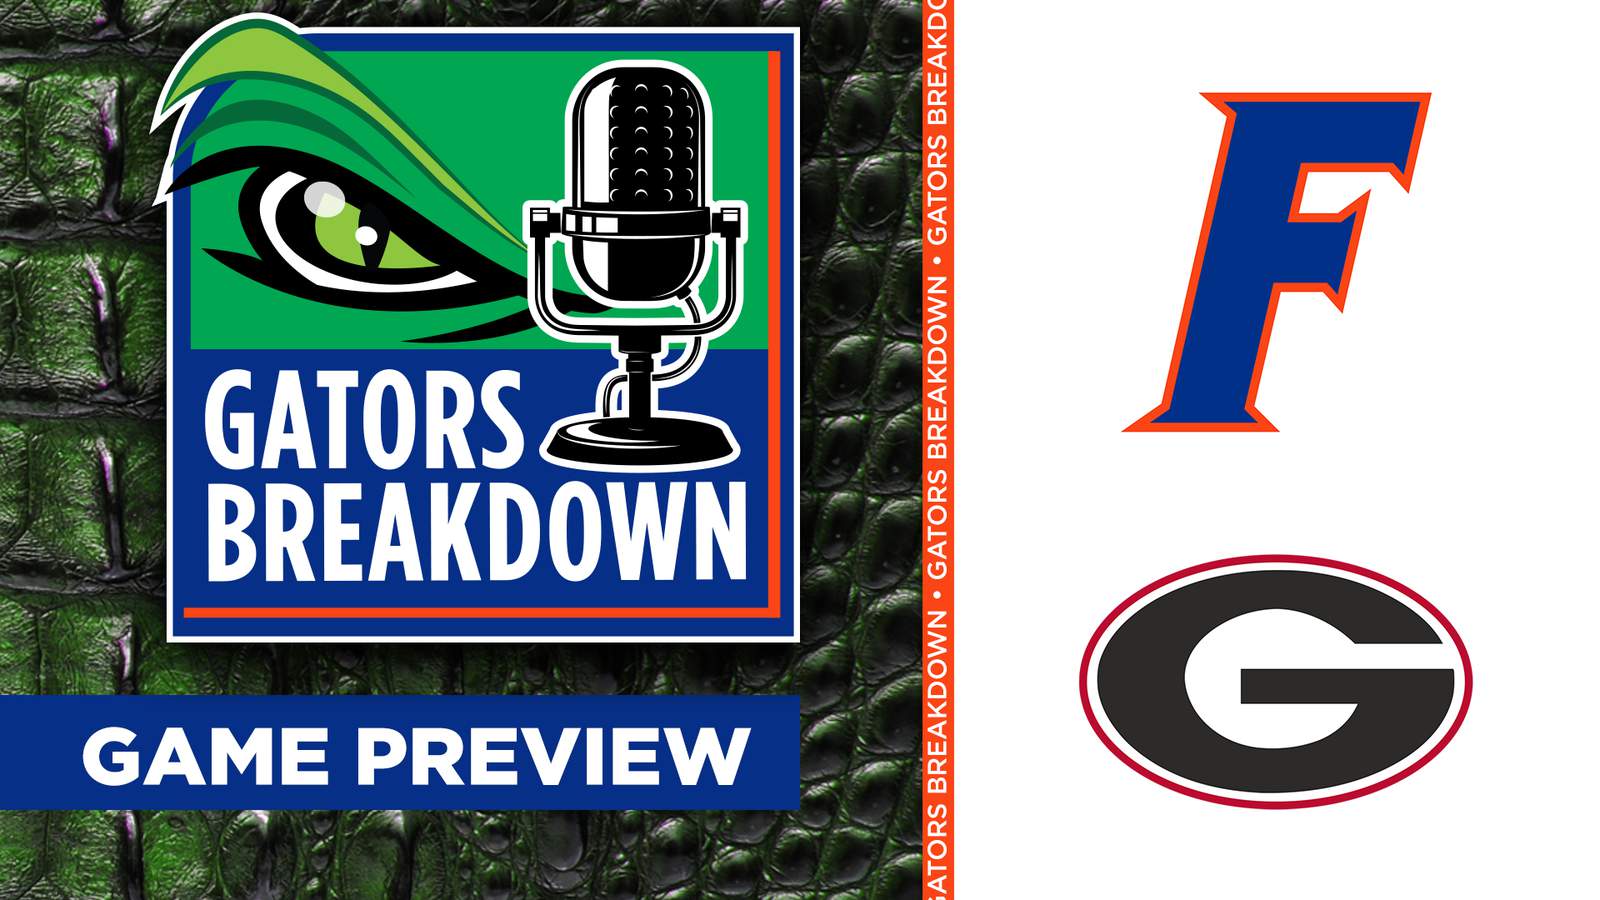 Gators Breakdown: Georgia Game Preview 2020 with Chris Doering